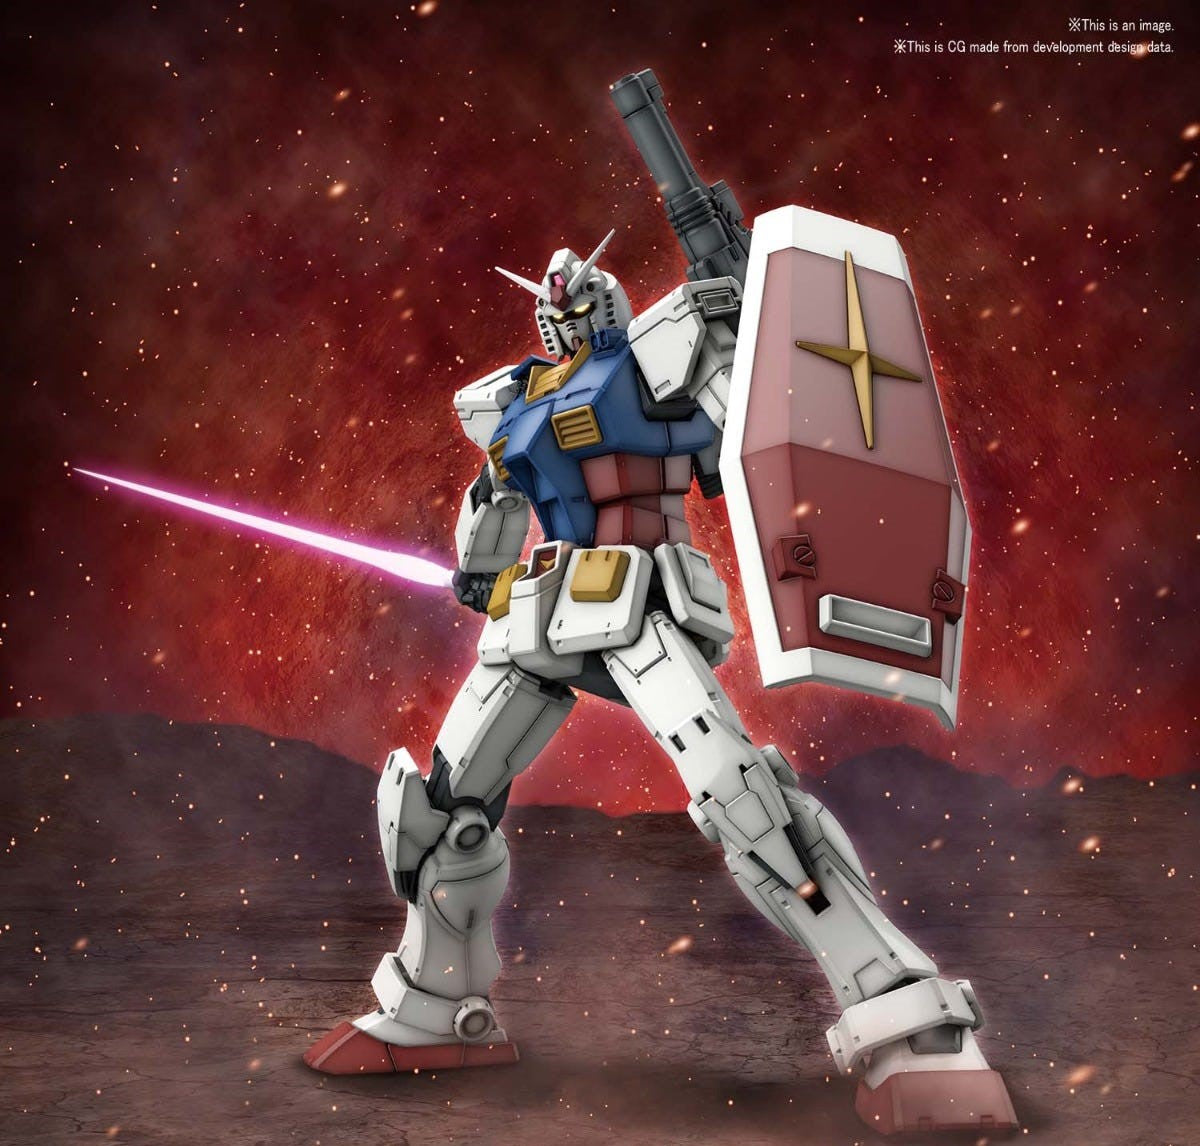 Bandai Spirits HG #26 1/144 RX-78-02 Gundam 'Gundam The Origin'